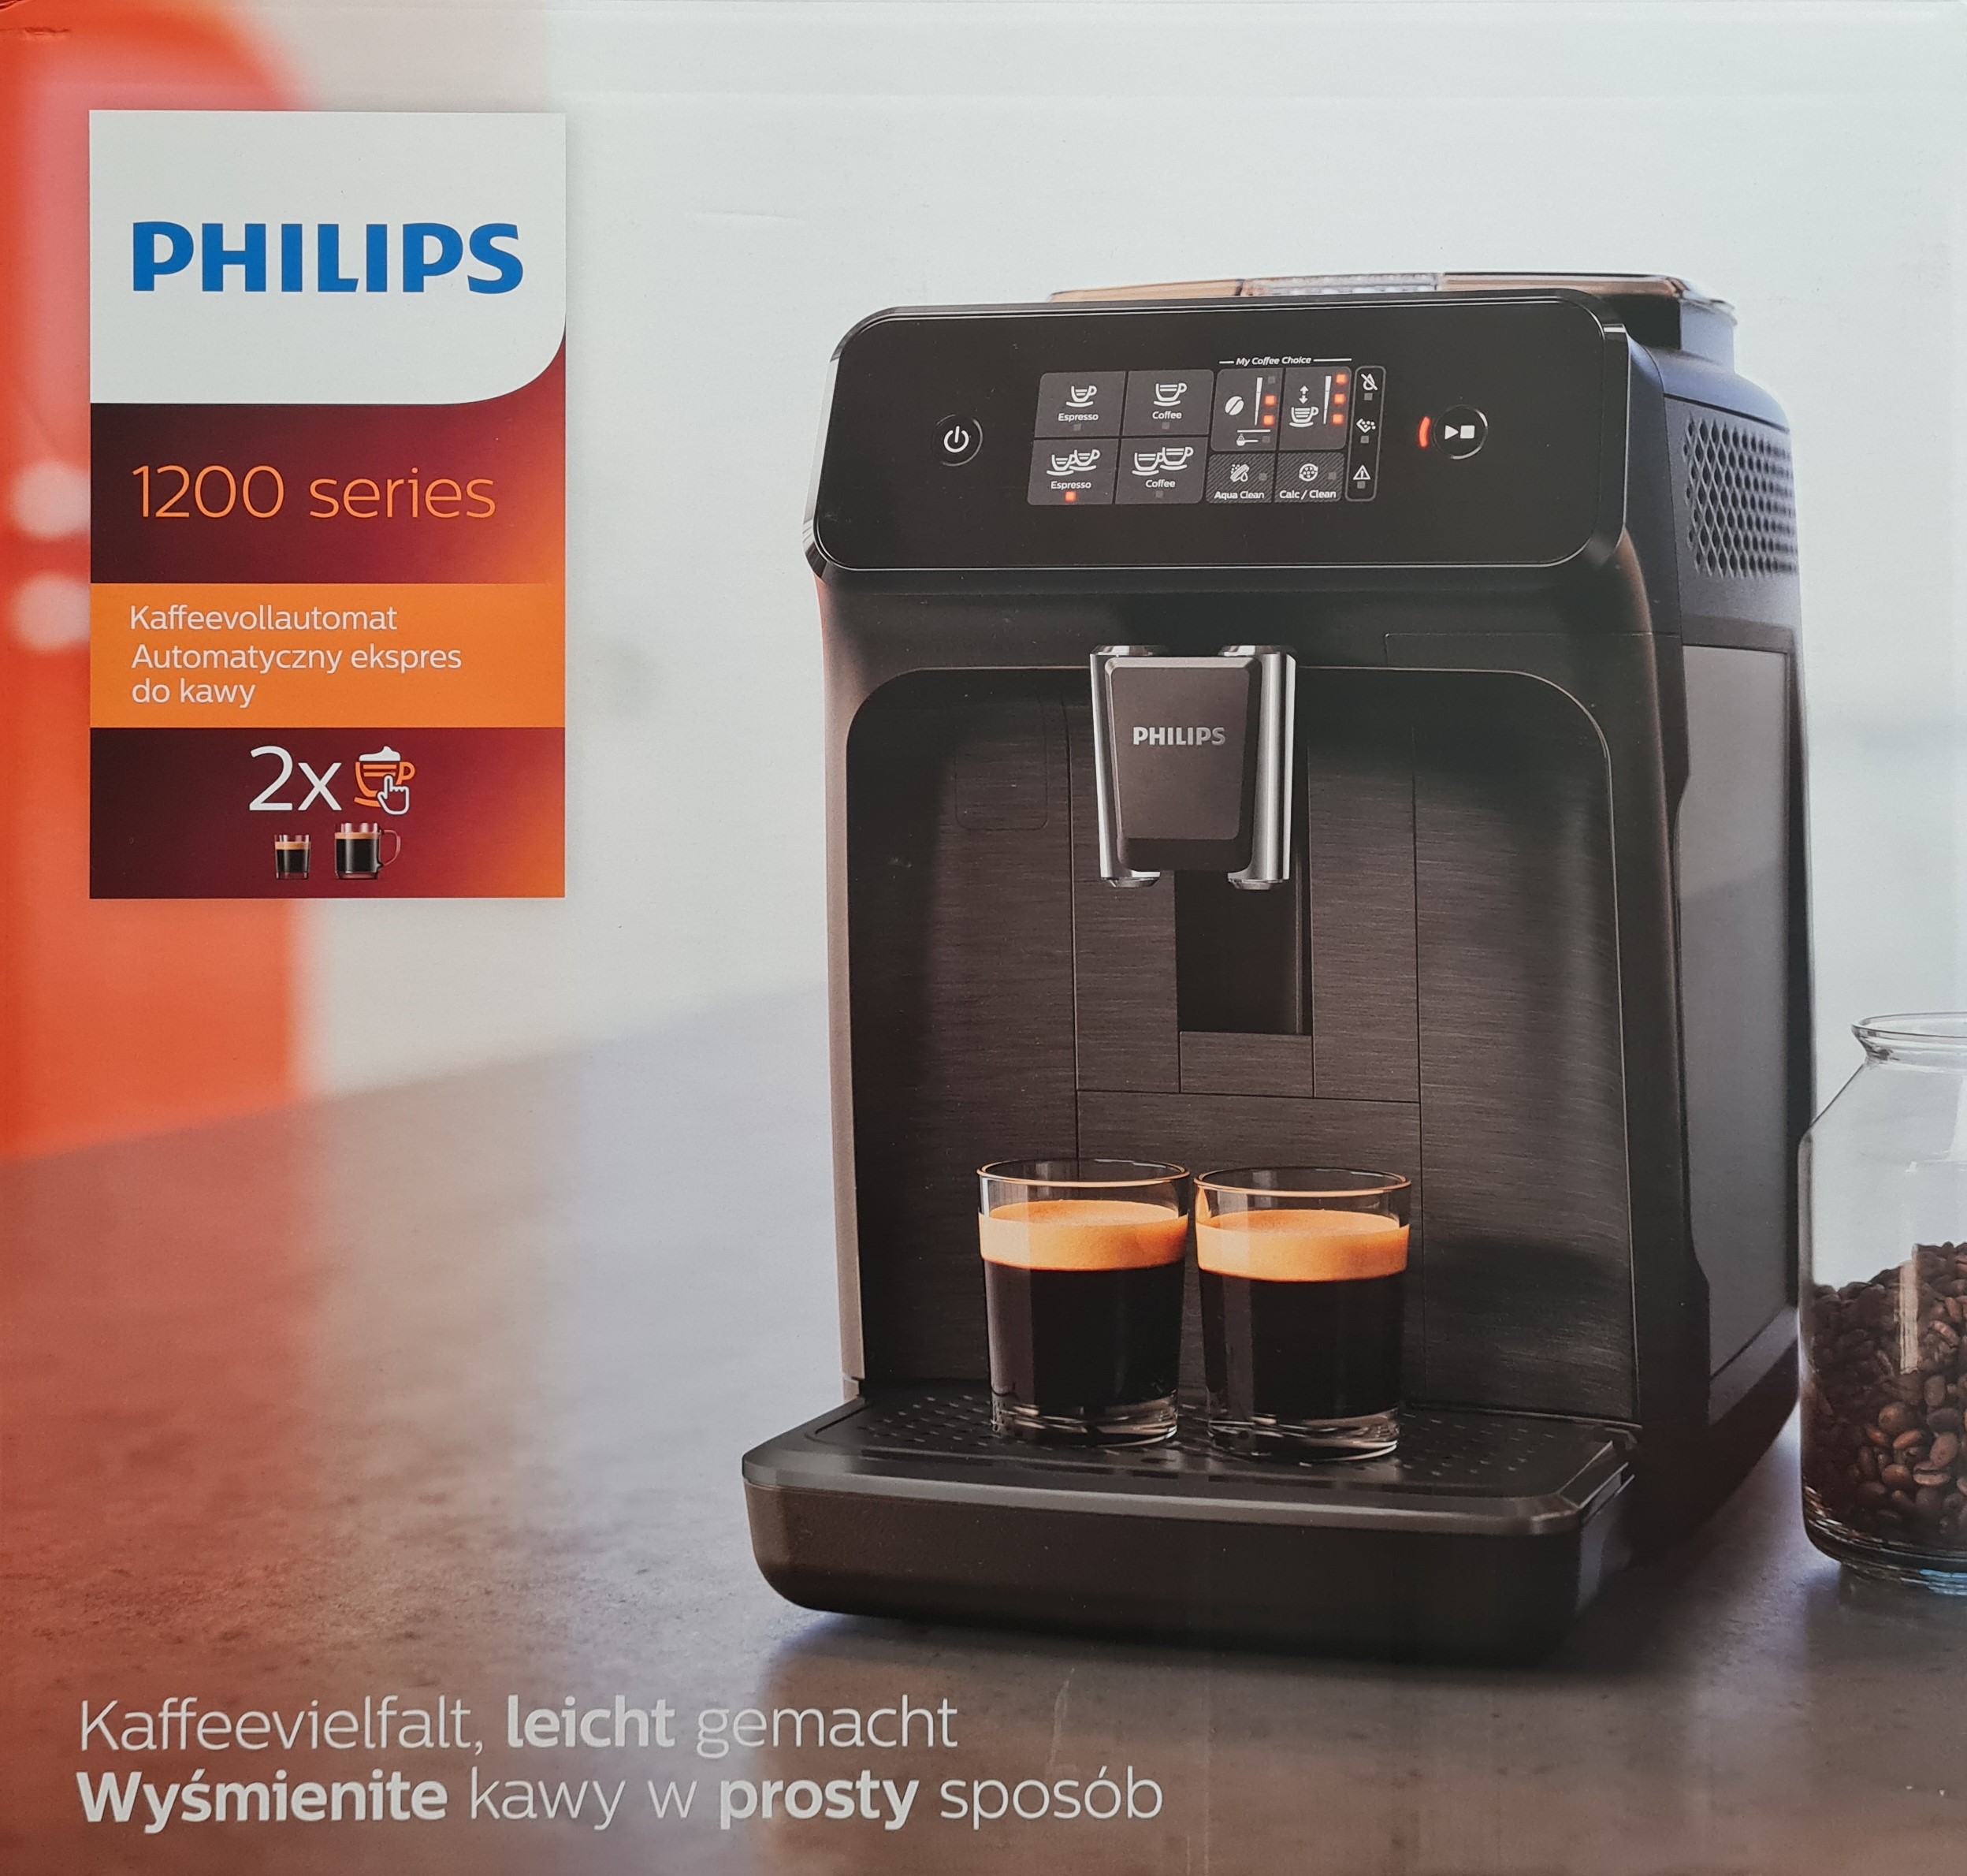 EP1200/00 Series Philips 1200